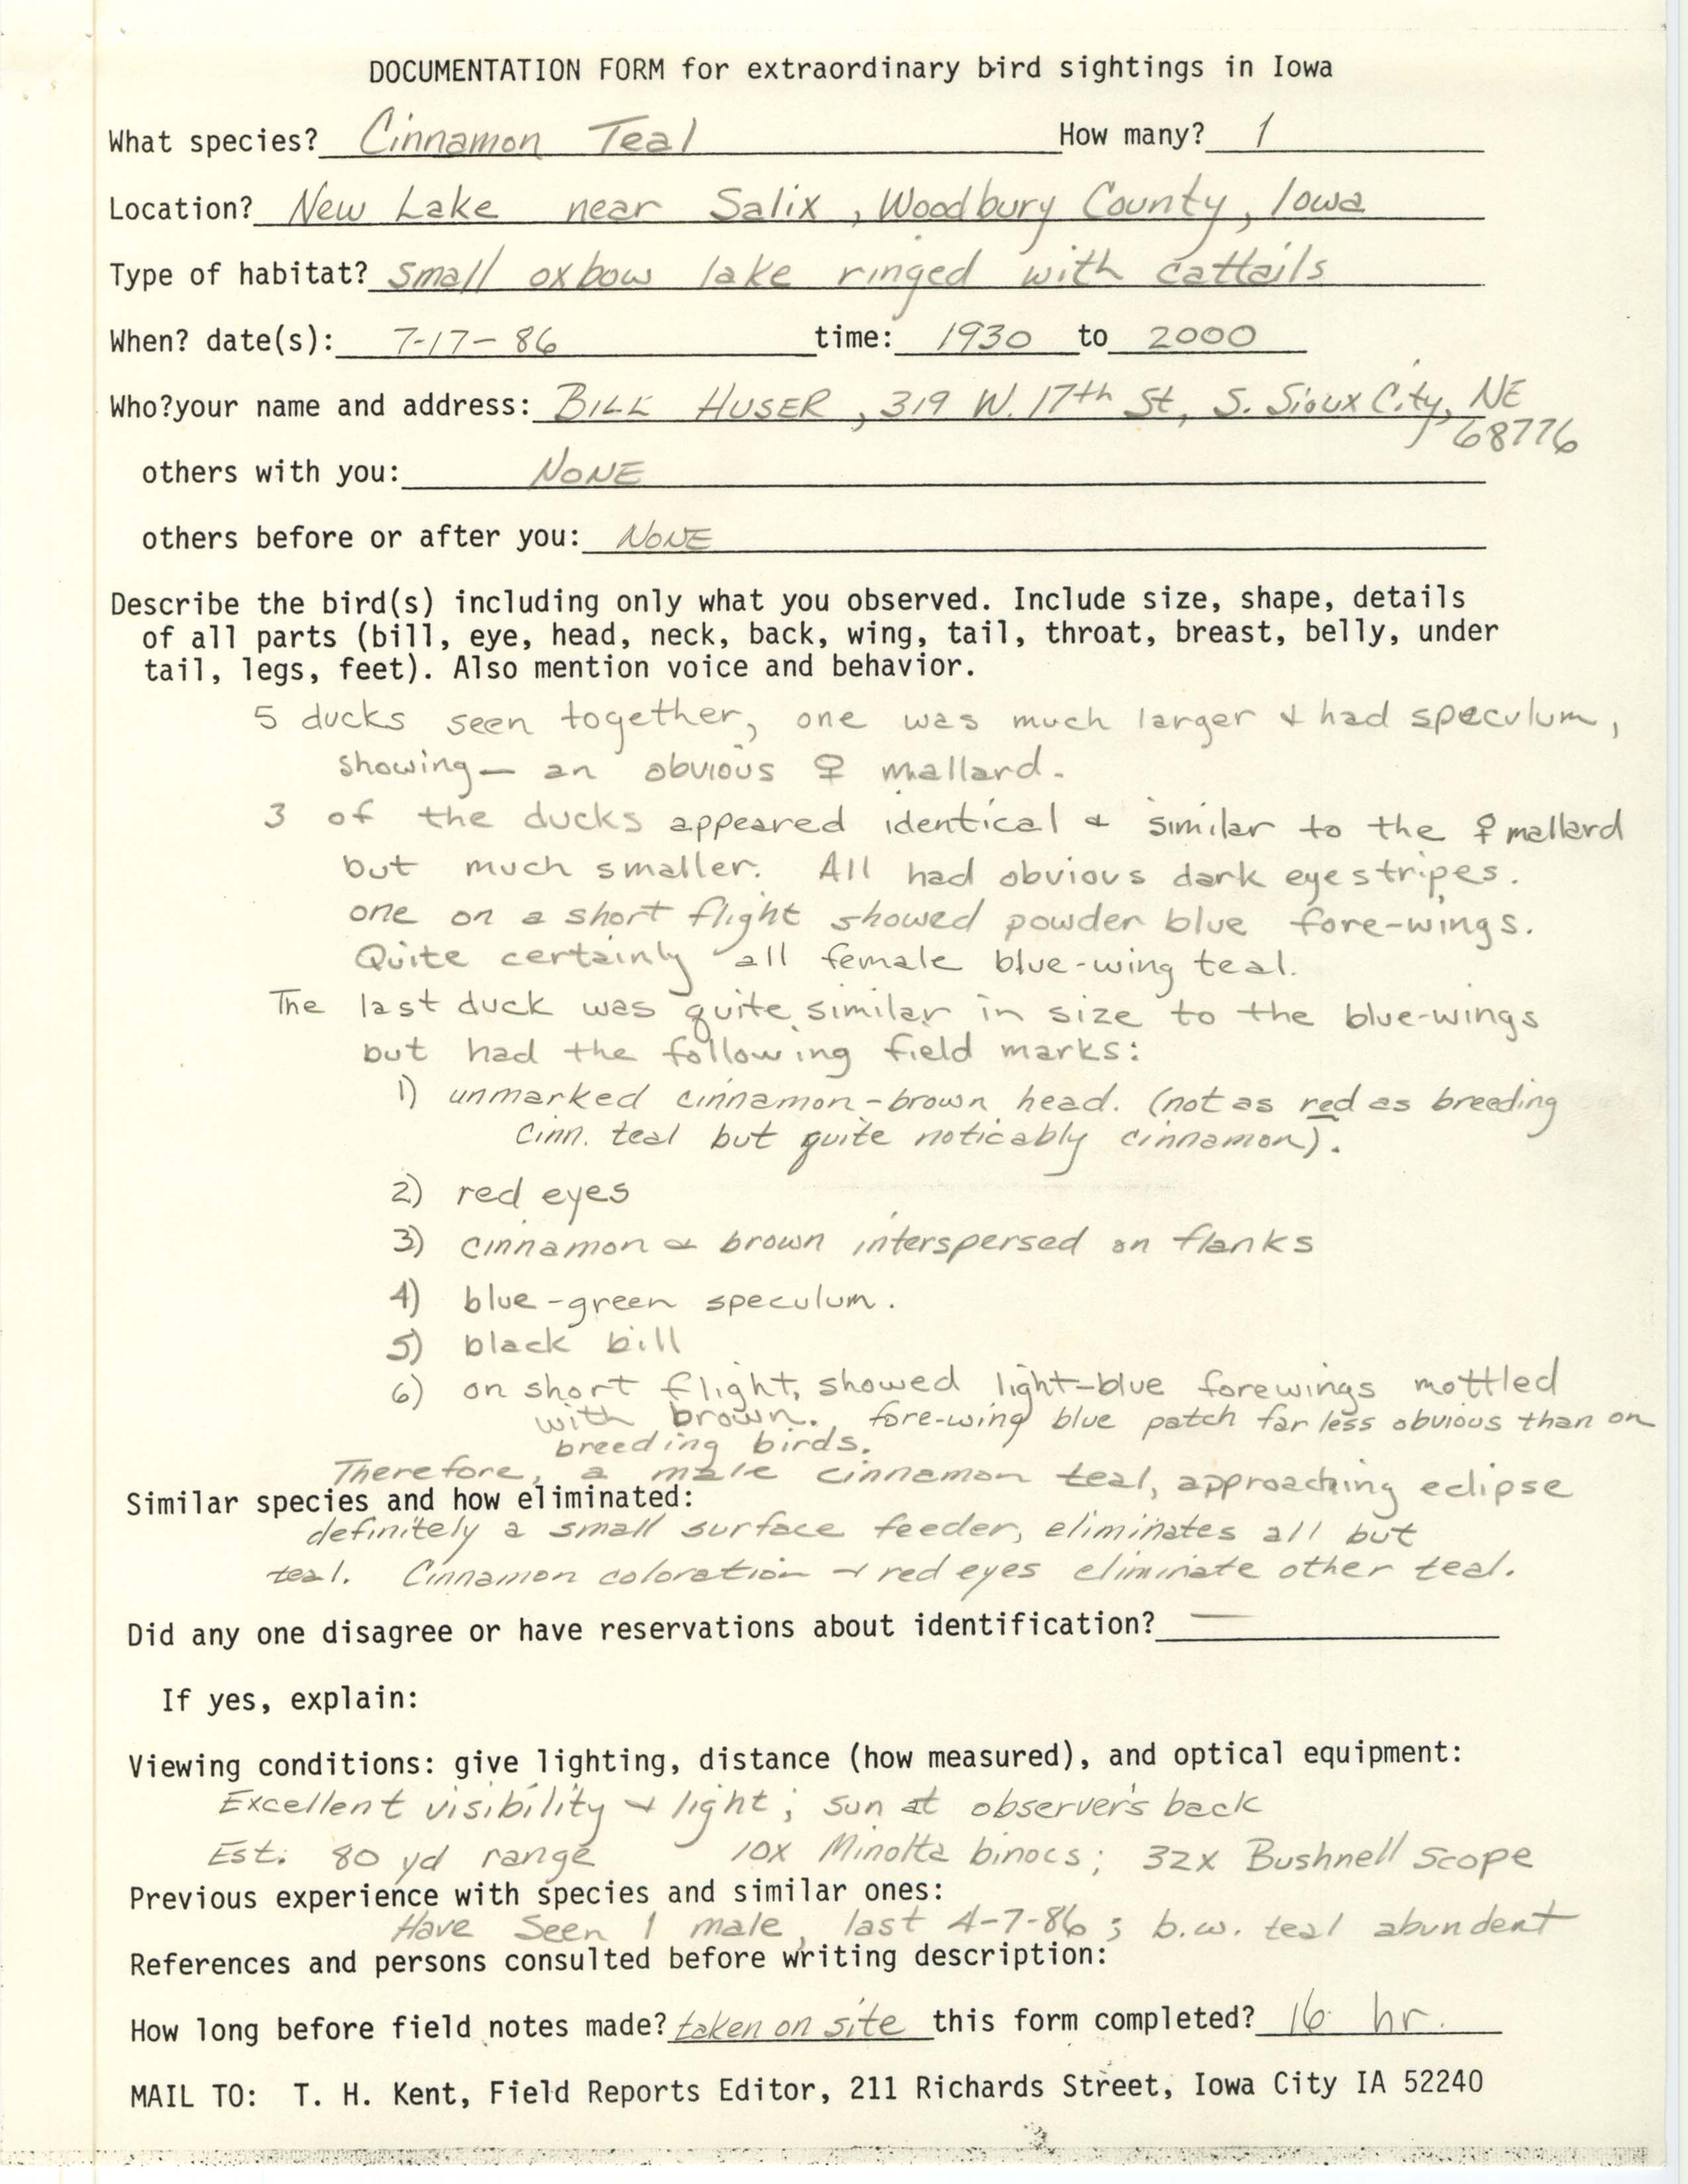 Rare bird documentation form for Cinnamon Teal at New Lake, 1986